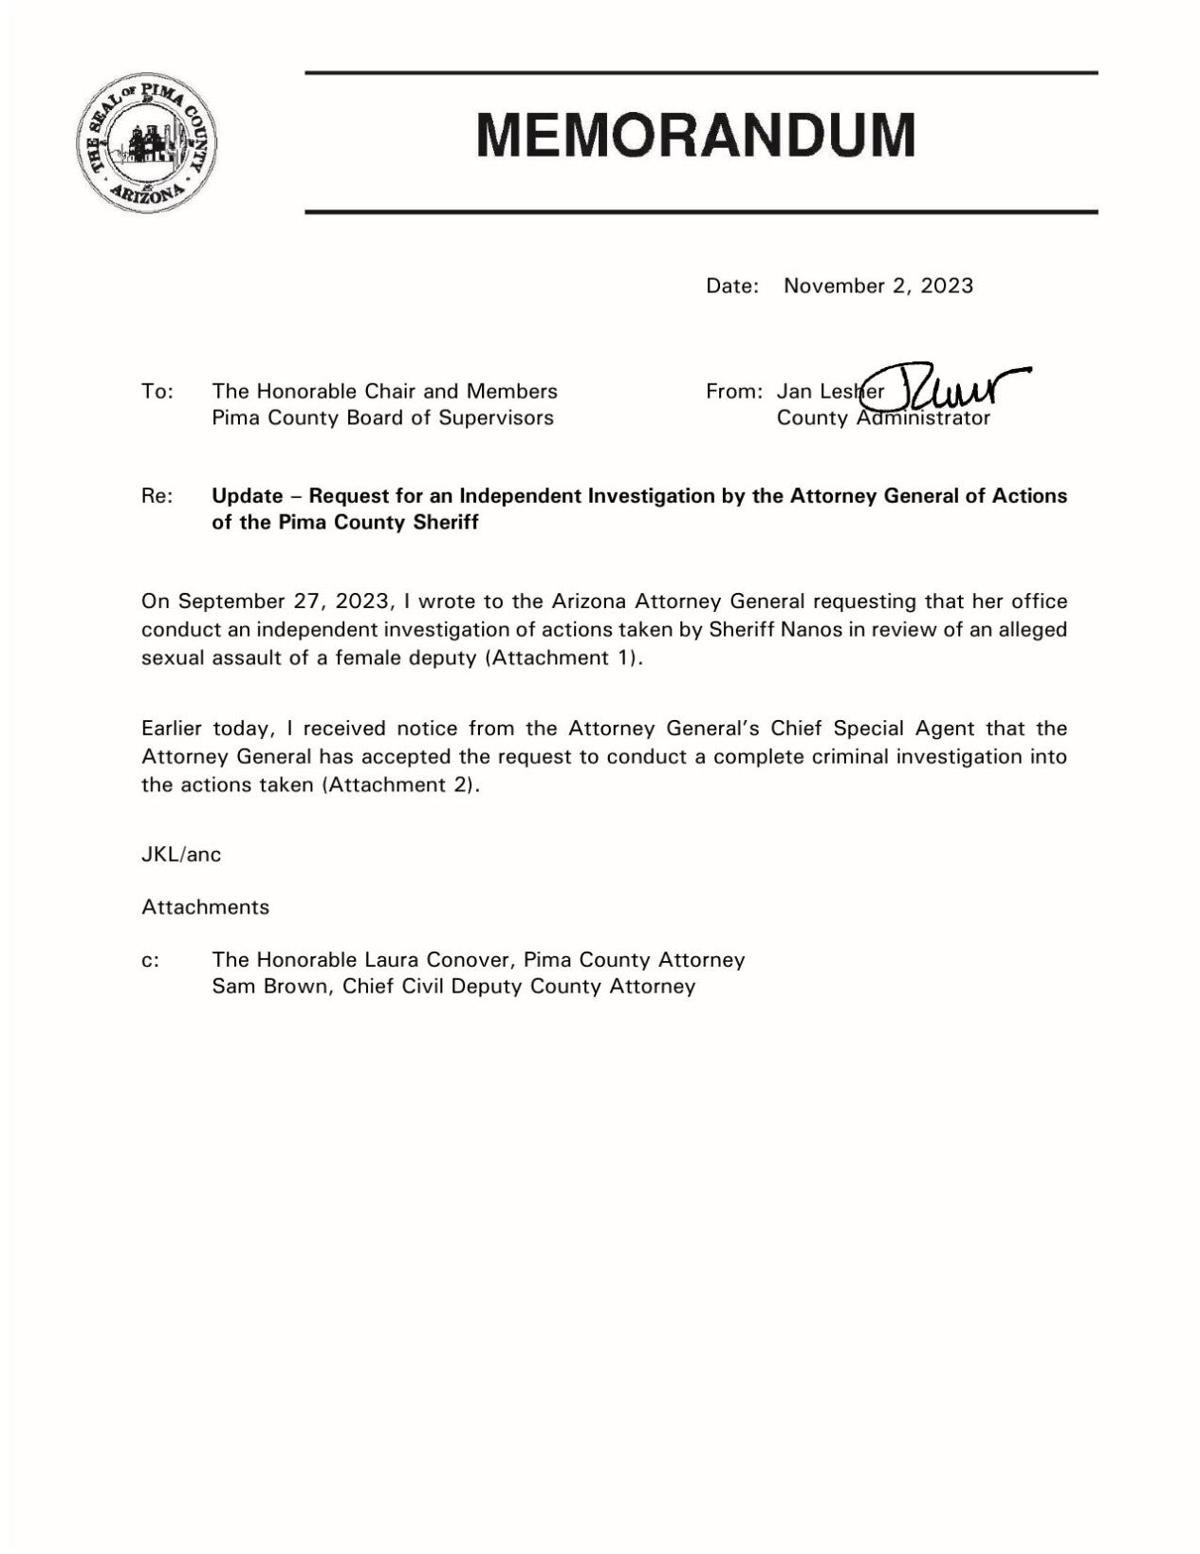 Correspondence of Pima County Board of Supervisors, Arizona Attorney General